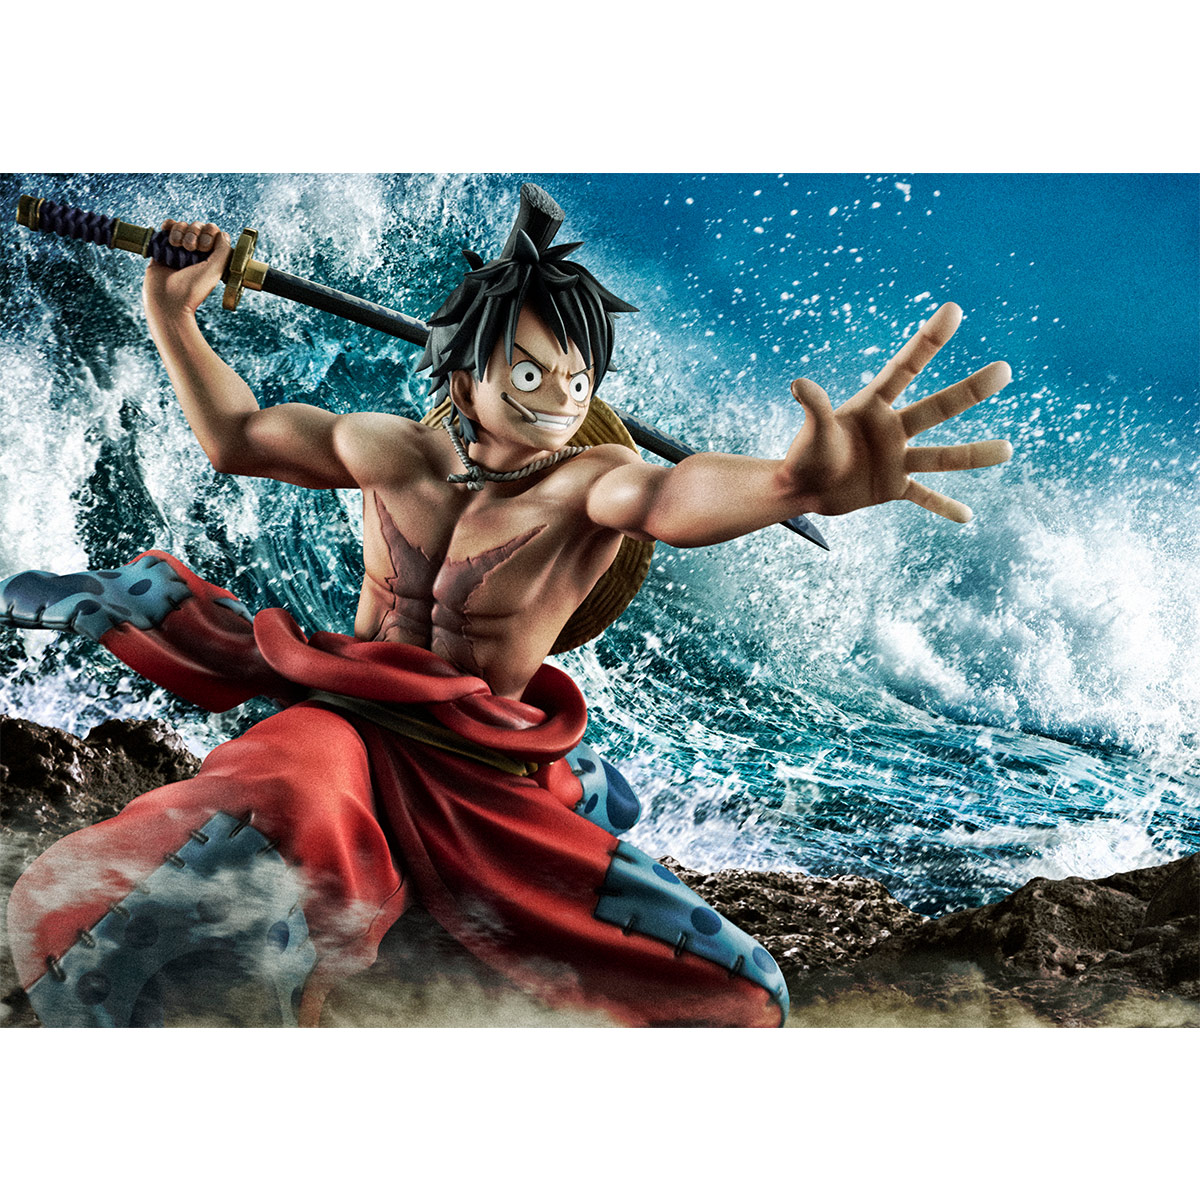 Portrait.Of.Pirates ワンピース “Warriors Alliance” ルフィ太郎 | MEGATREA SHOP